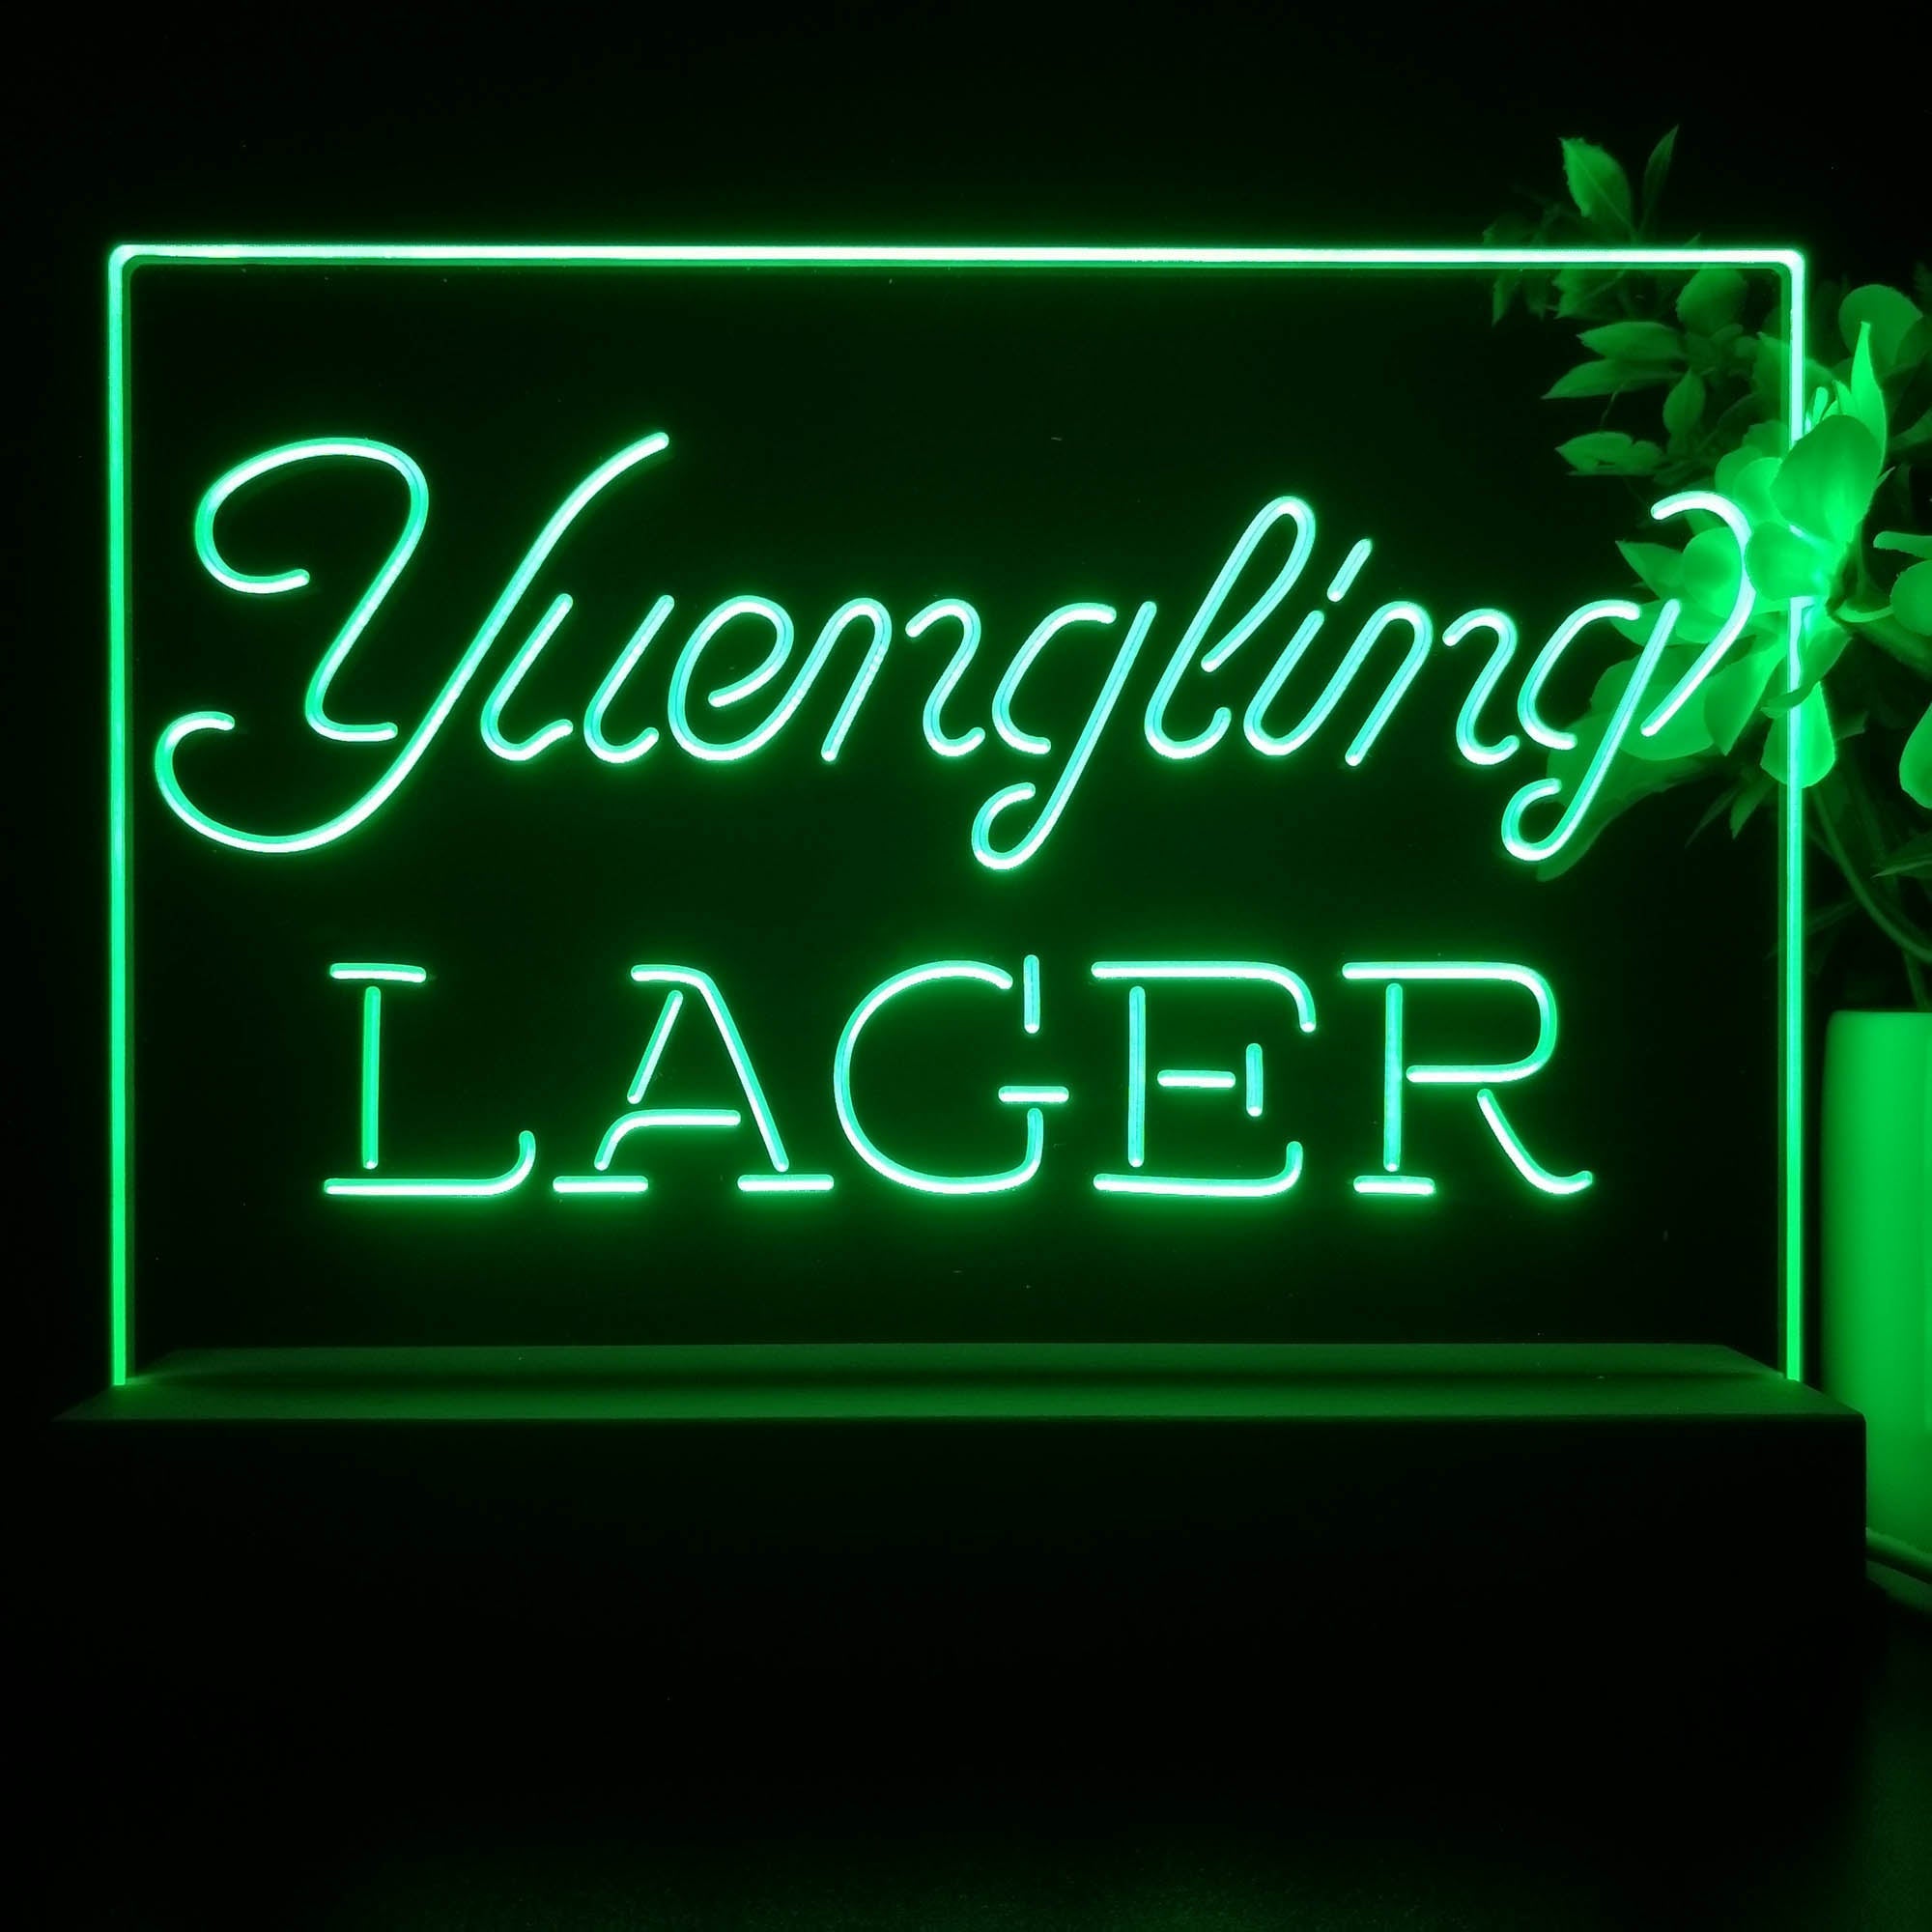 Yuengling Larger Beer Neon Sign Pub Bar Lamp